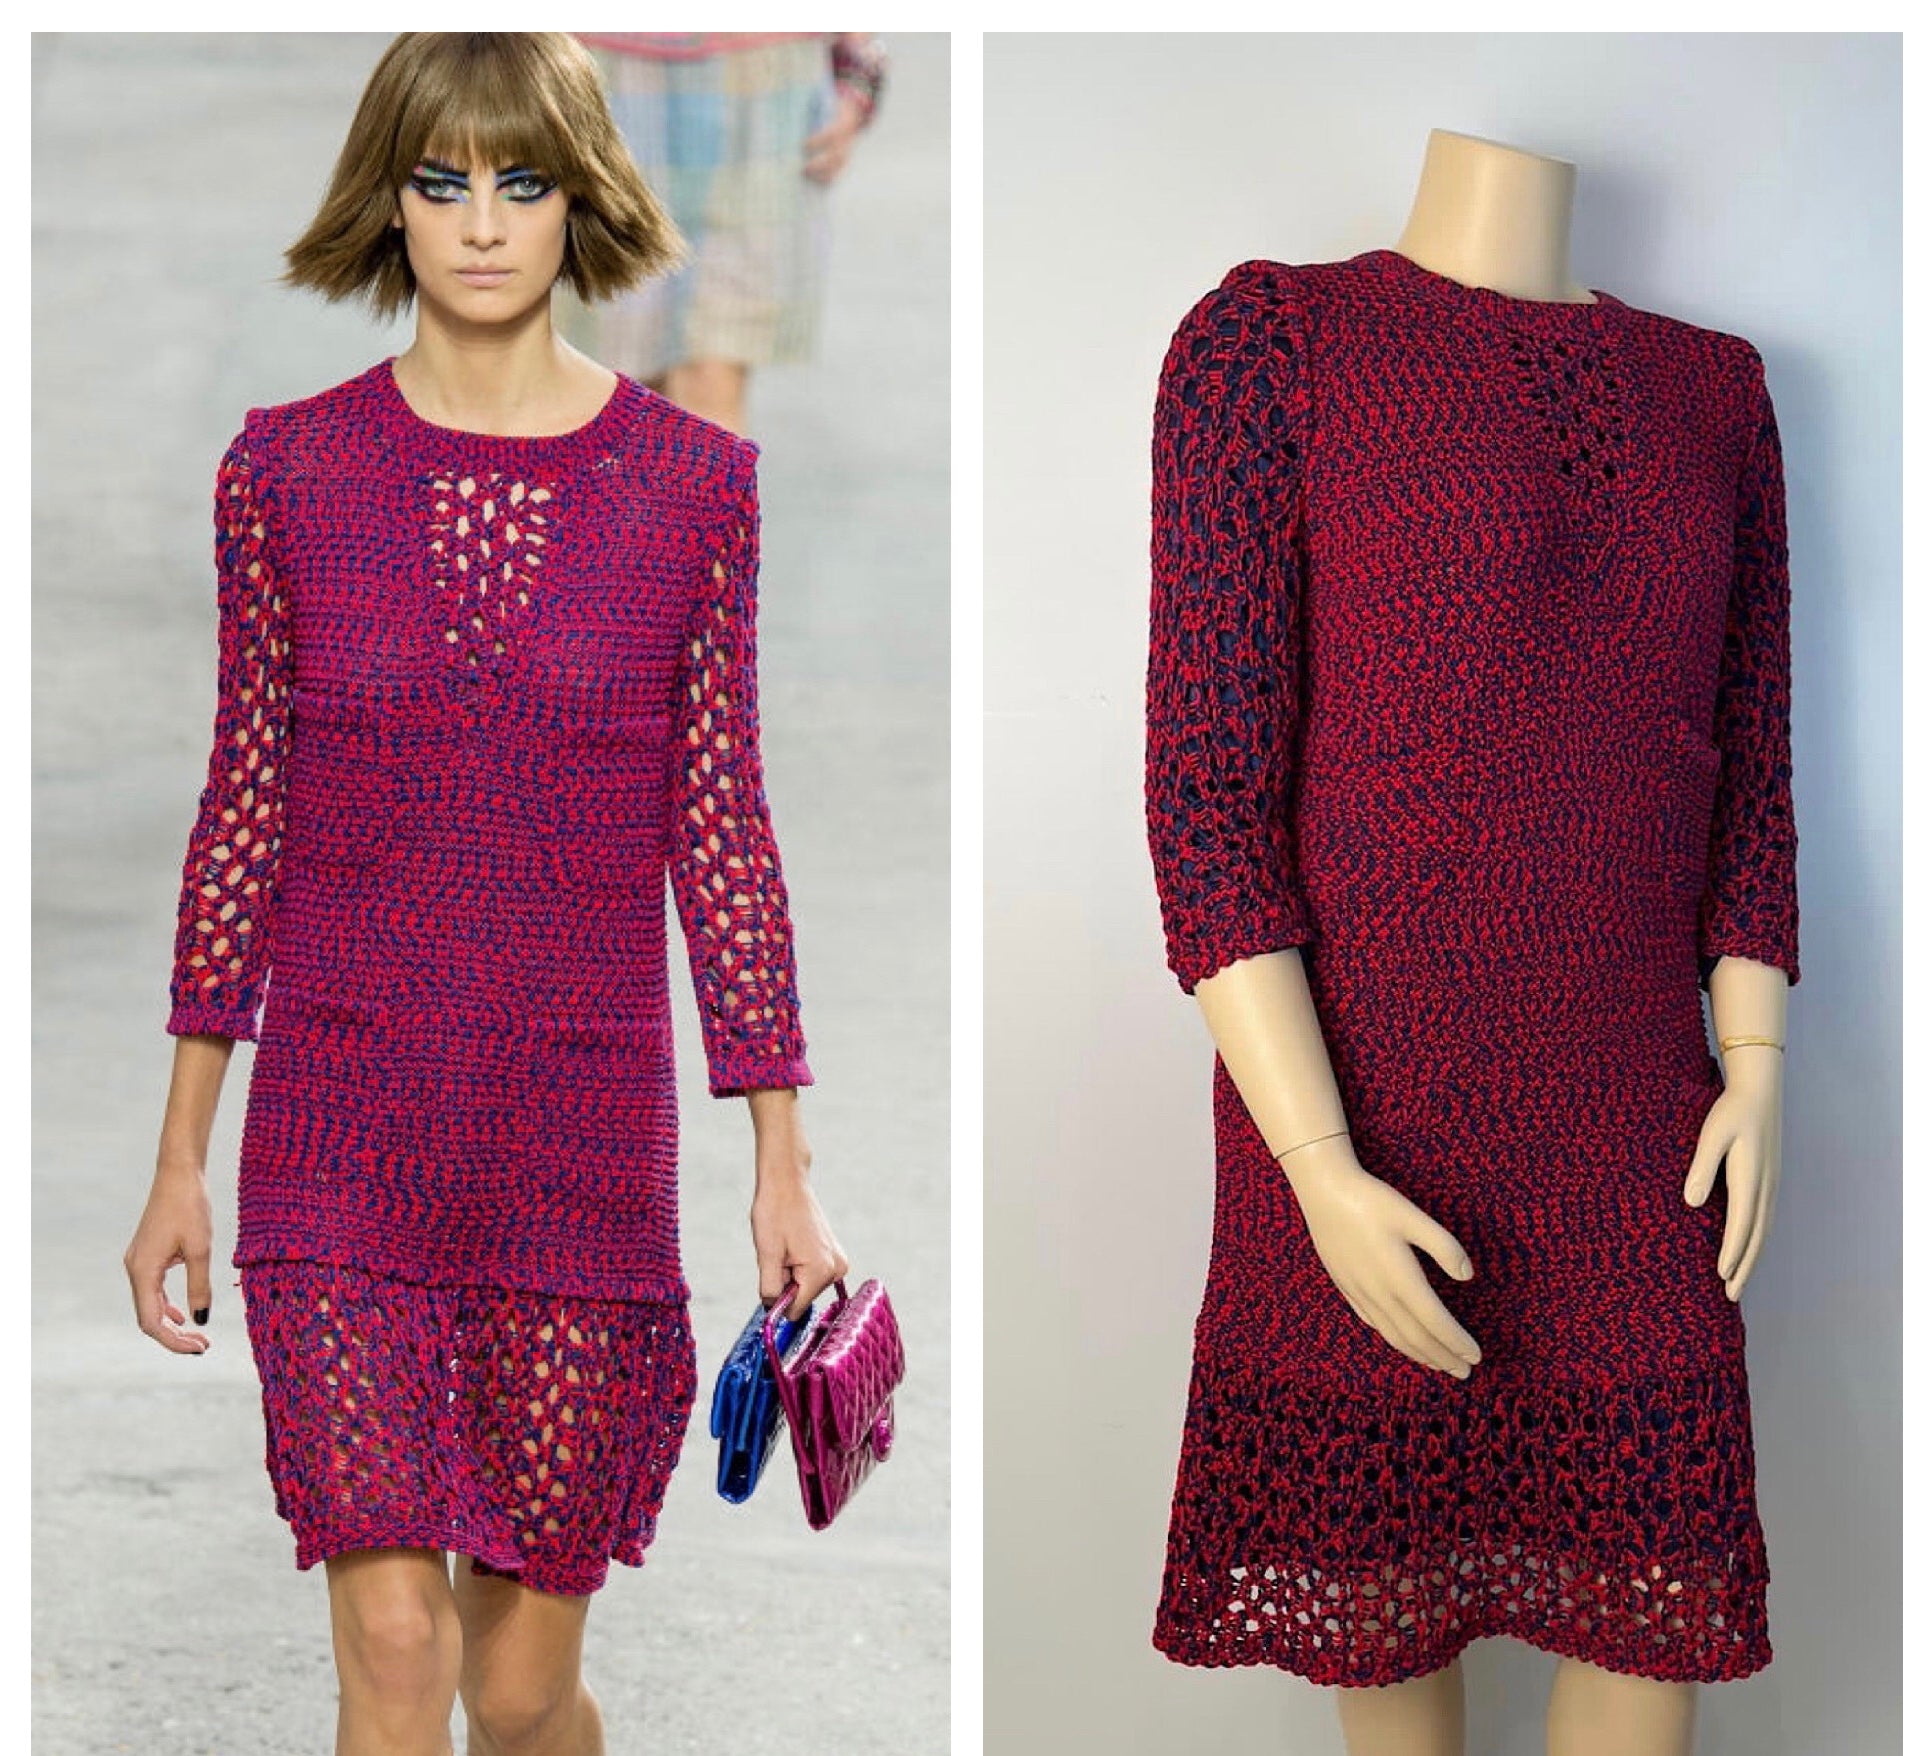 HelensChanel Chanel 14p 2014 Spring Crochet Navy Red Dress US 12/14/16